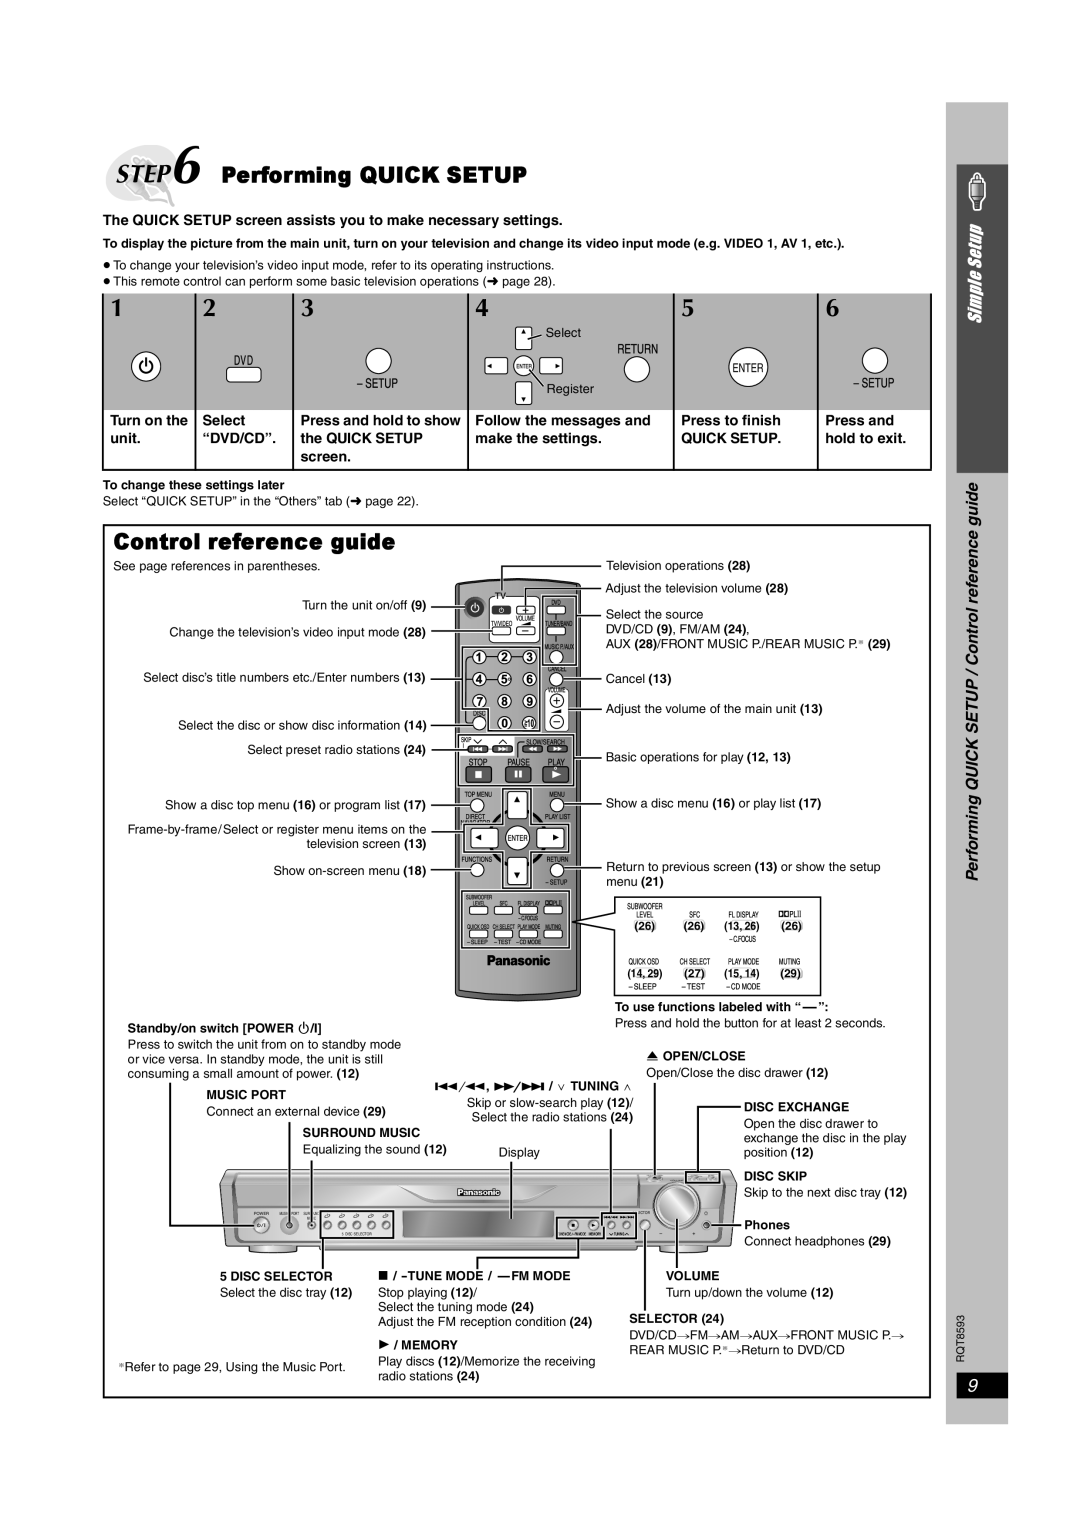 Panasonic SC-HT440 Performing QUICK SETUP, Control reference guide, Setup, Select, unit, “Dvd/Cd”, the QUICK SETUP, screen 